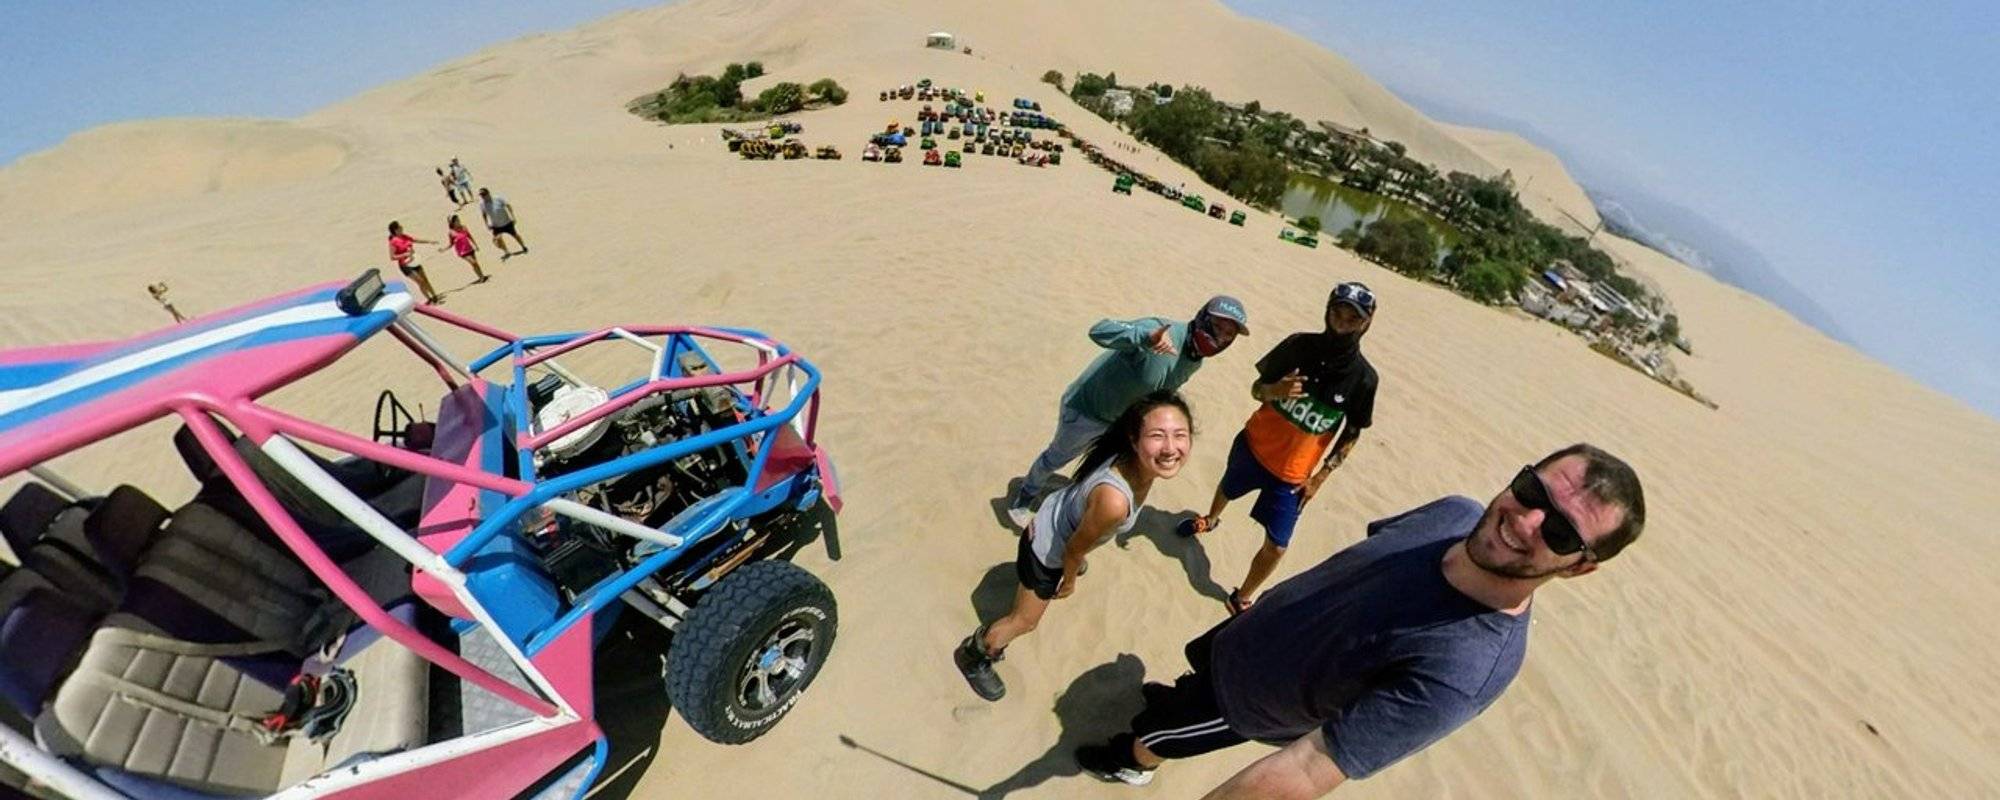 Dune buggy and sandboarding HUACACHINA, PERU 🇵🇪